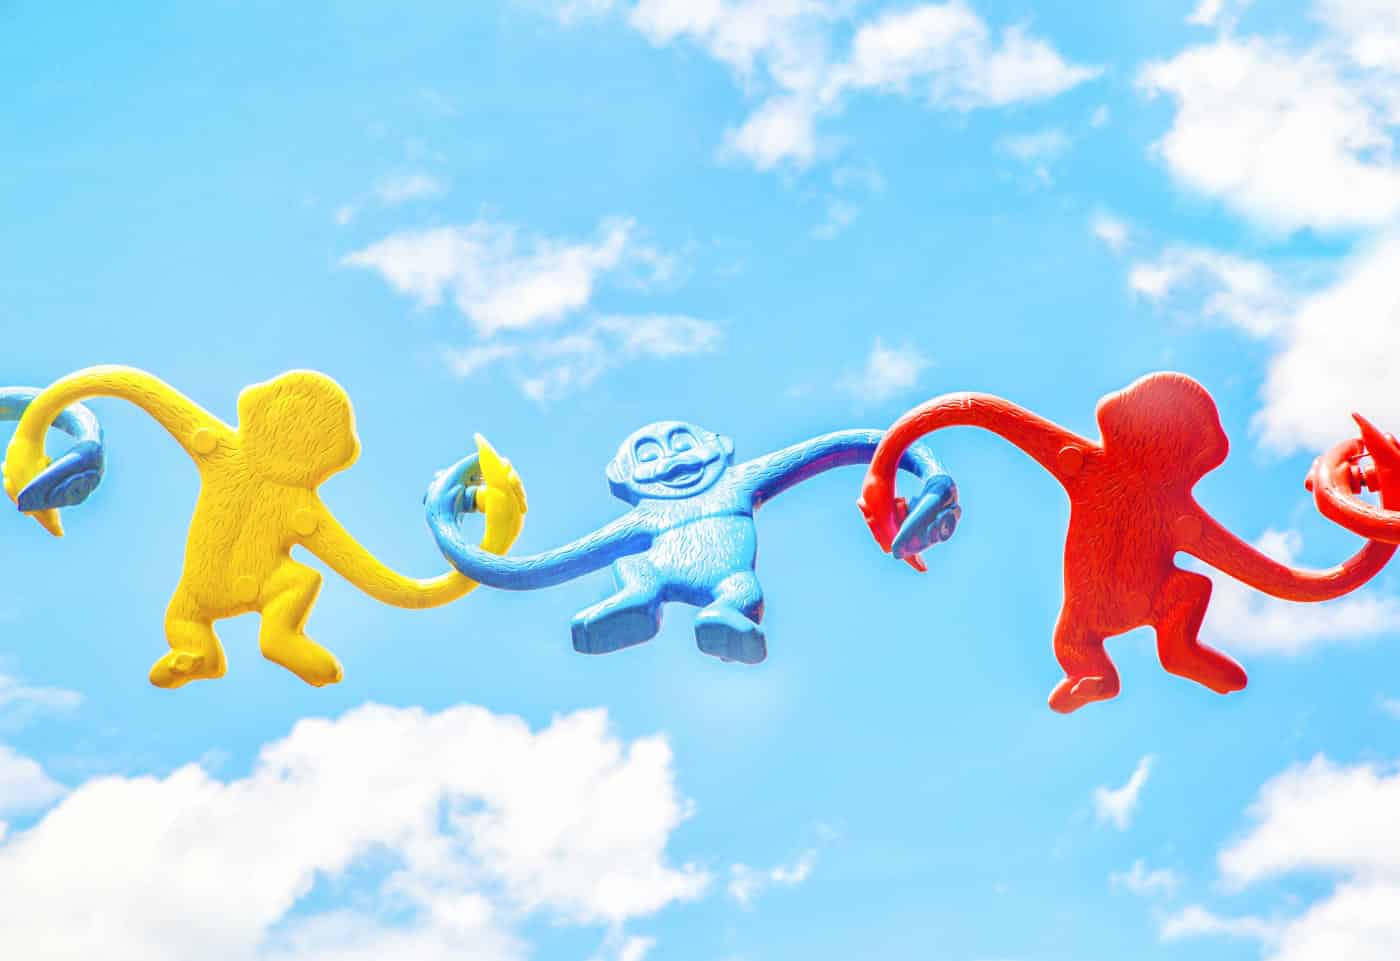 Colorful plastic monkeys